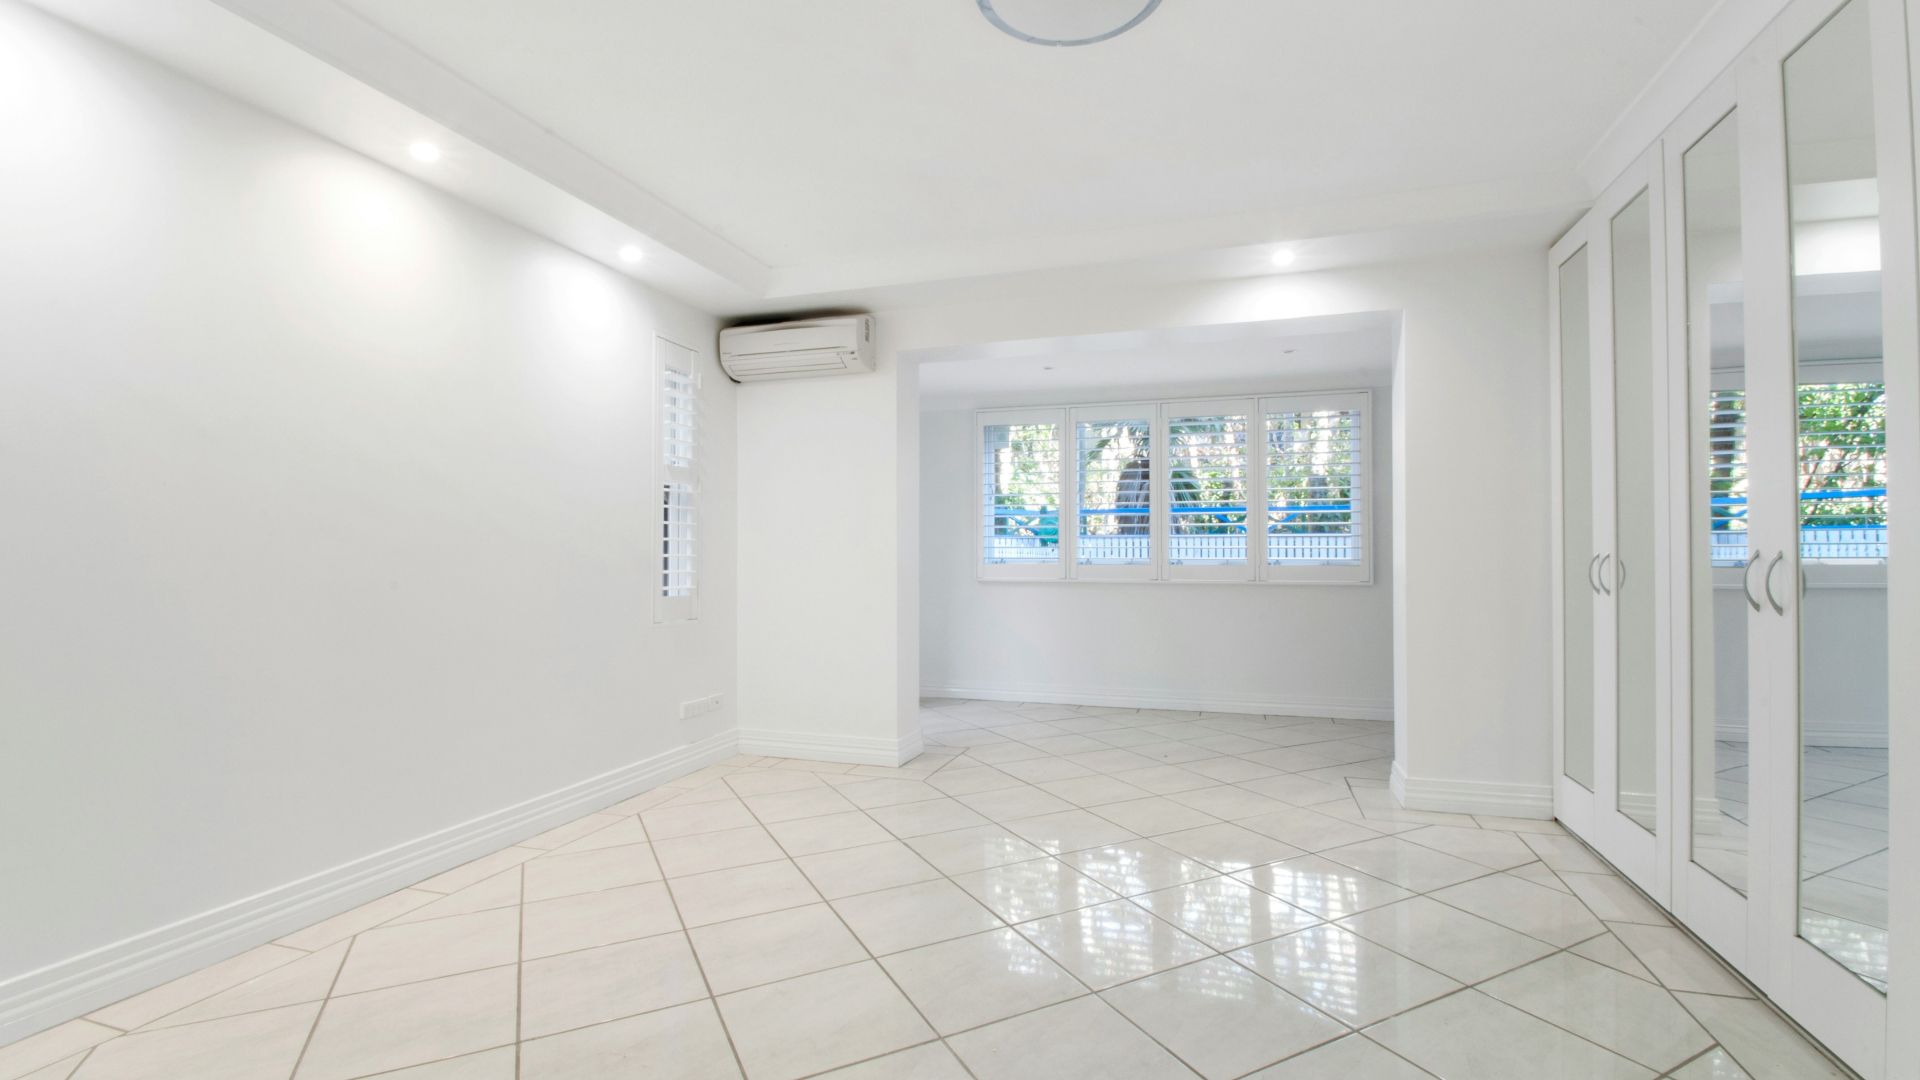 Why choose tile flooring for home remodeling?